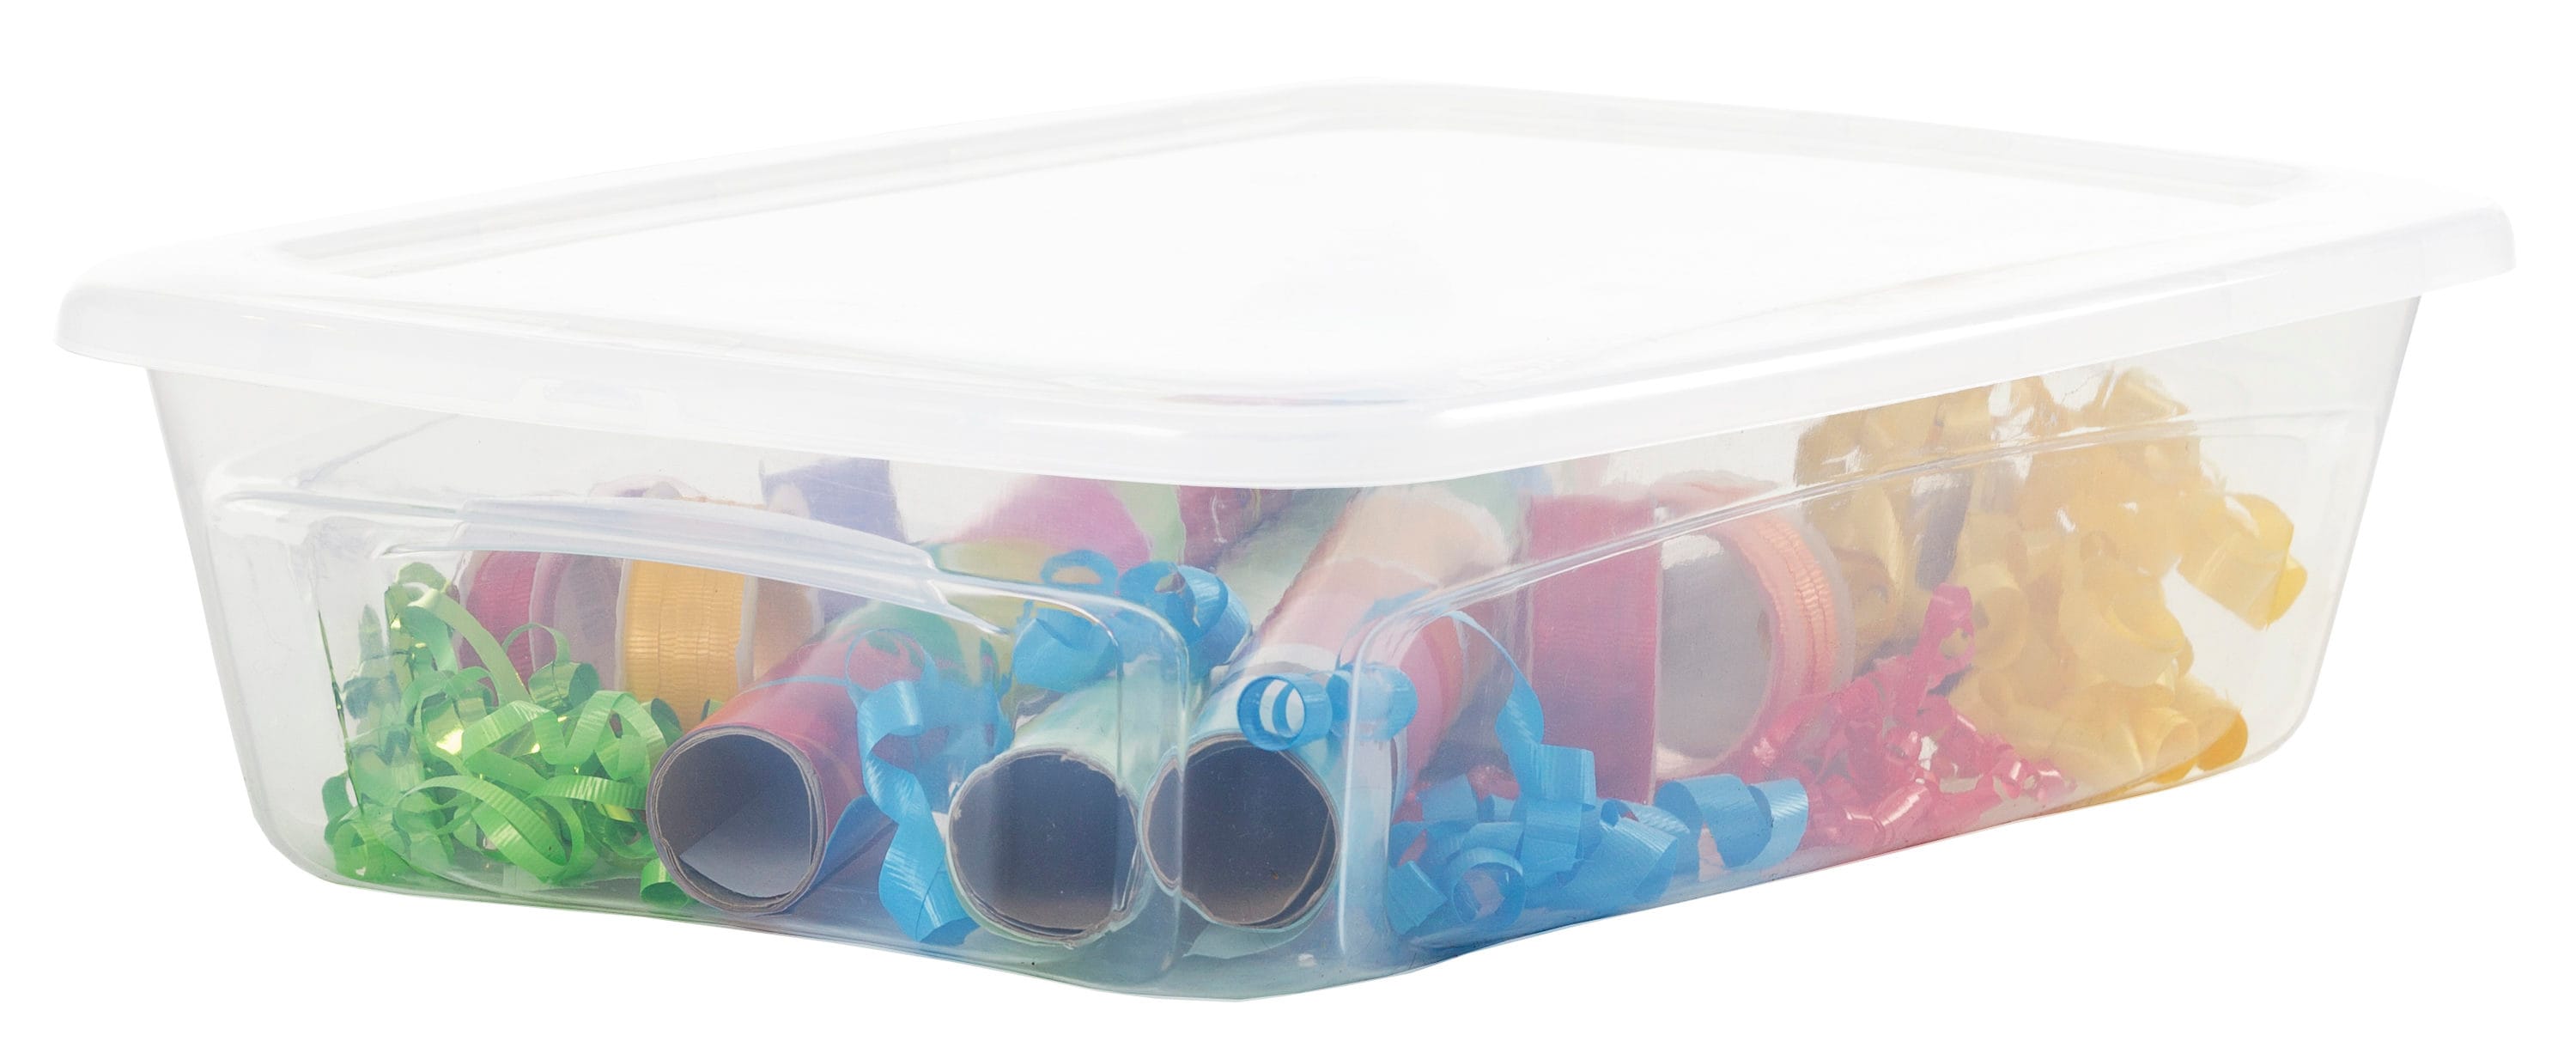 Total Solution® 28-piece Plastic Storage Set